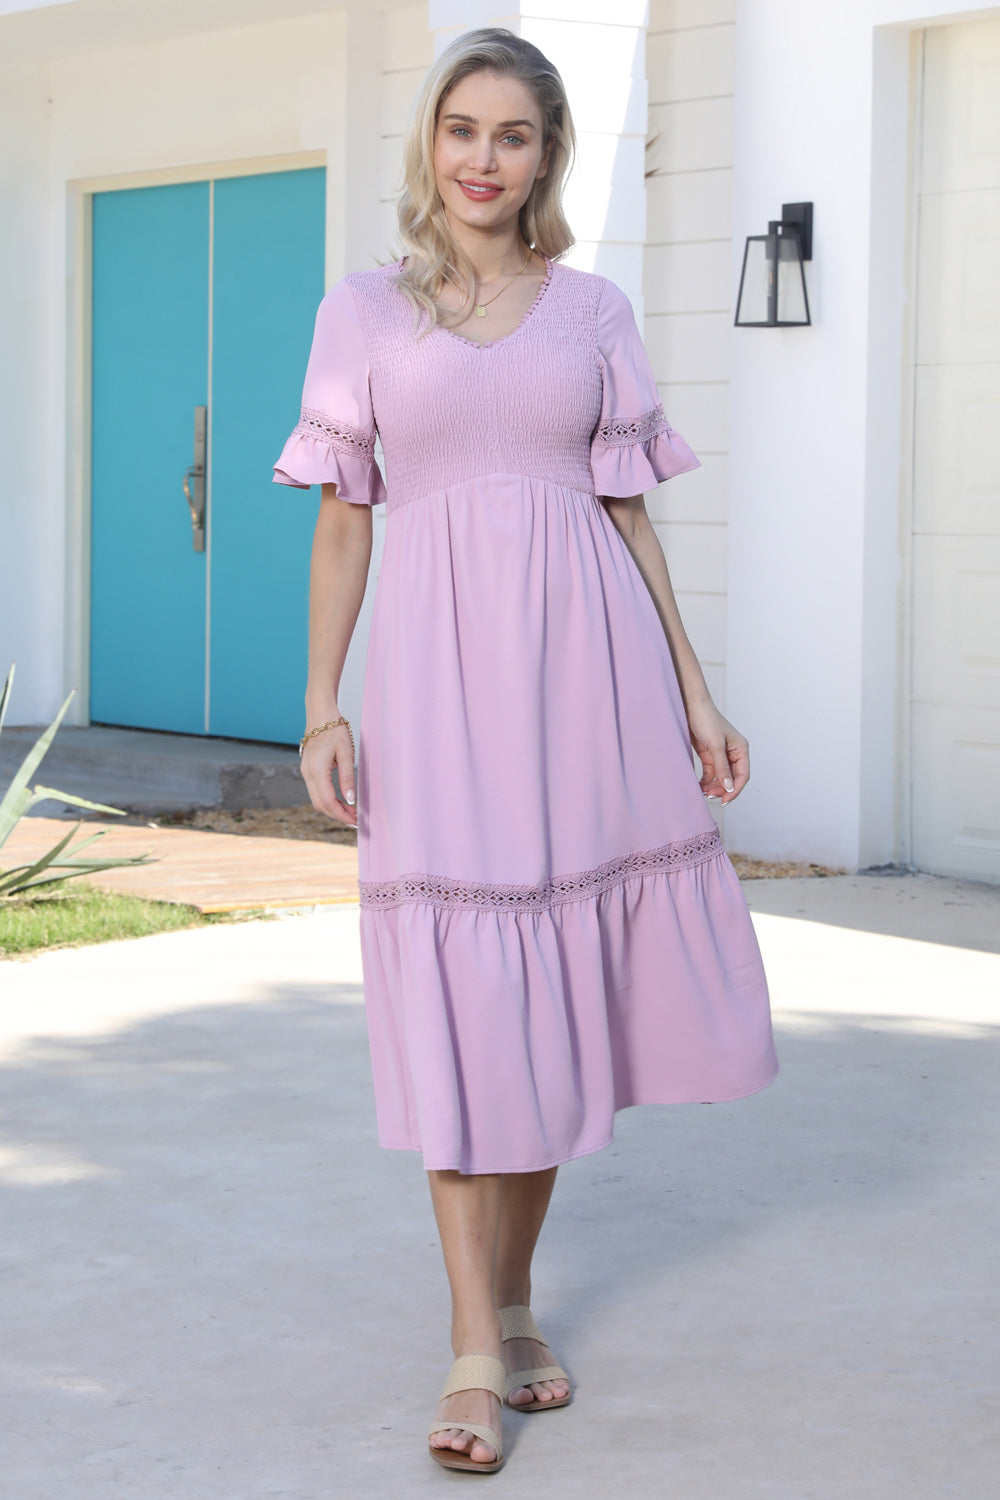 【Only $9.99】GRACE KARIN Smocked Bodice Dress Casual Short Bell Sleeve V-Neck A-Line Dress